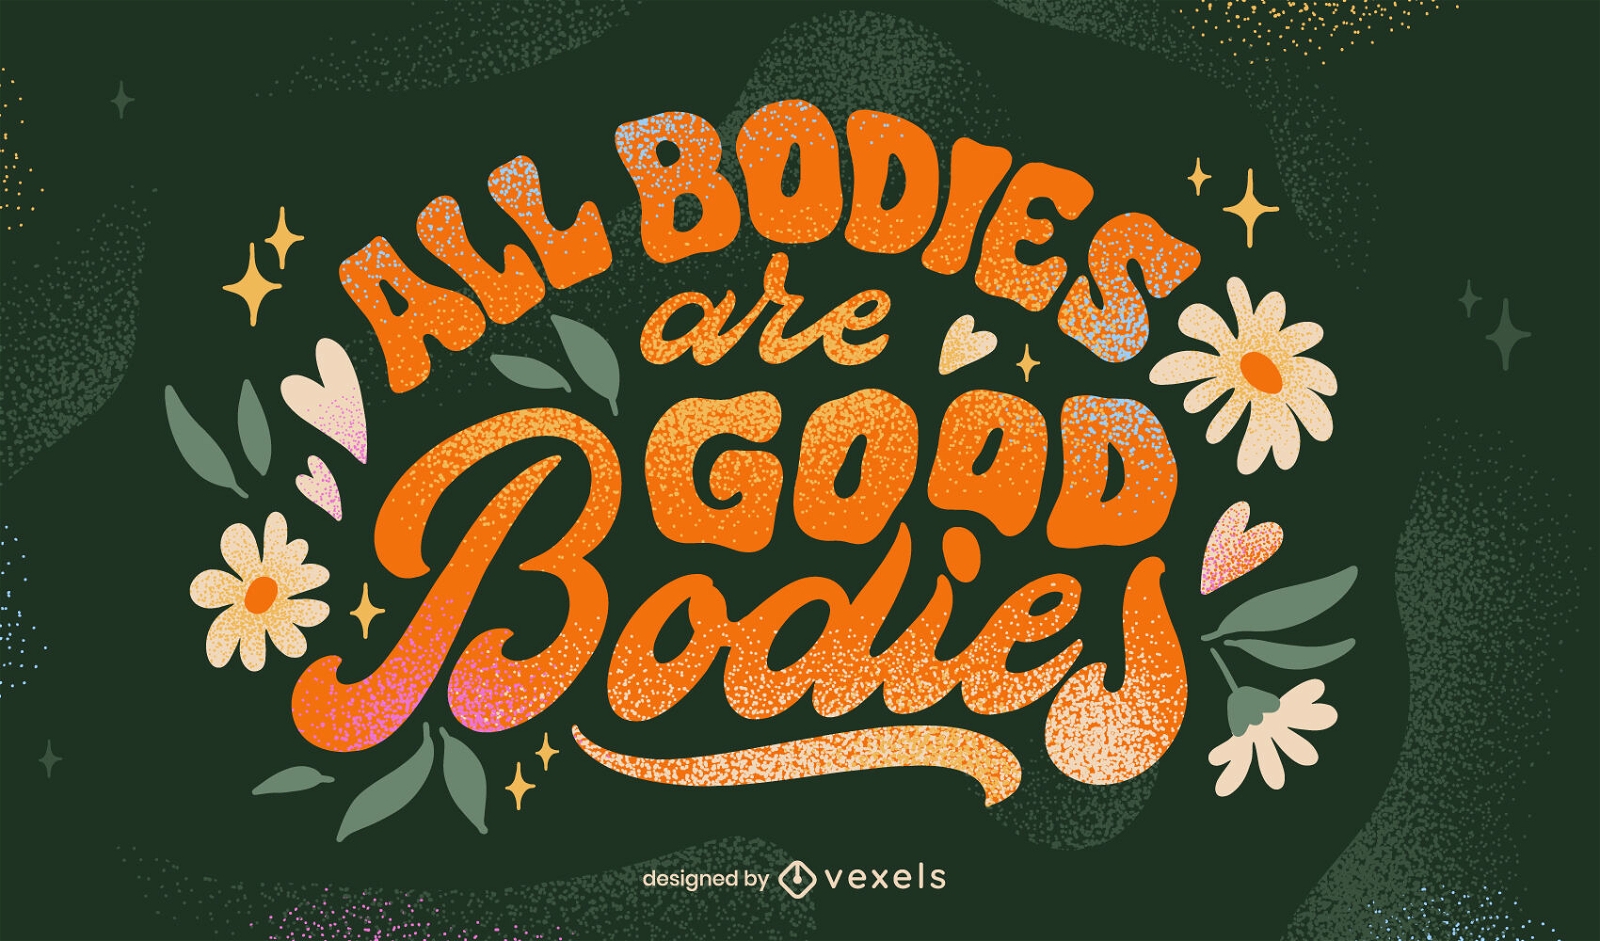 Cool body positivity lettering design